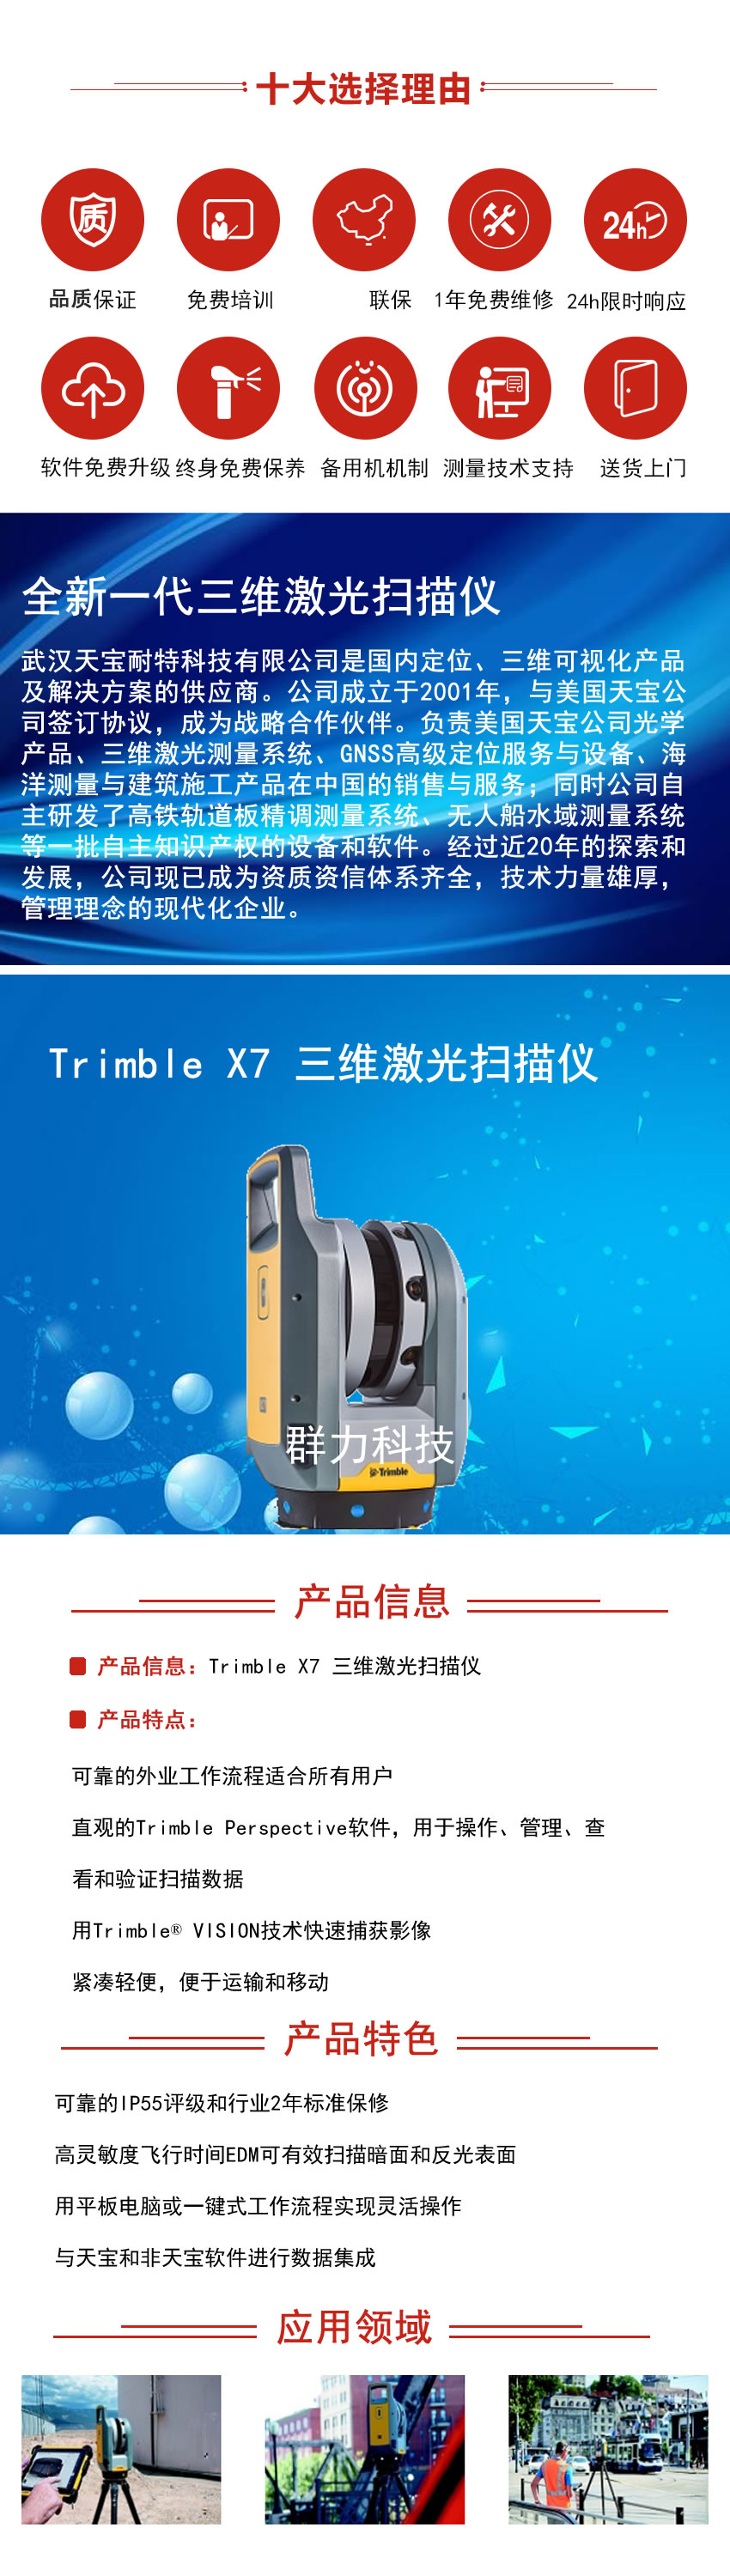 Trimble X7 三维激光扫描仪.jpg